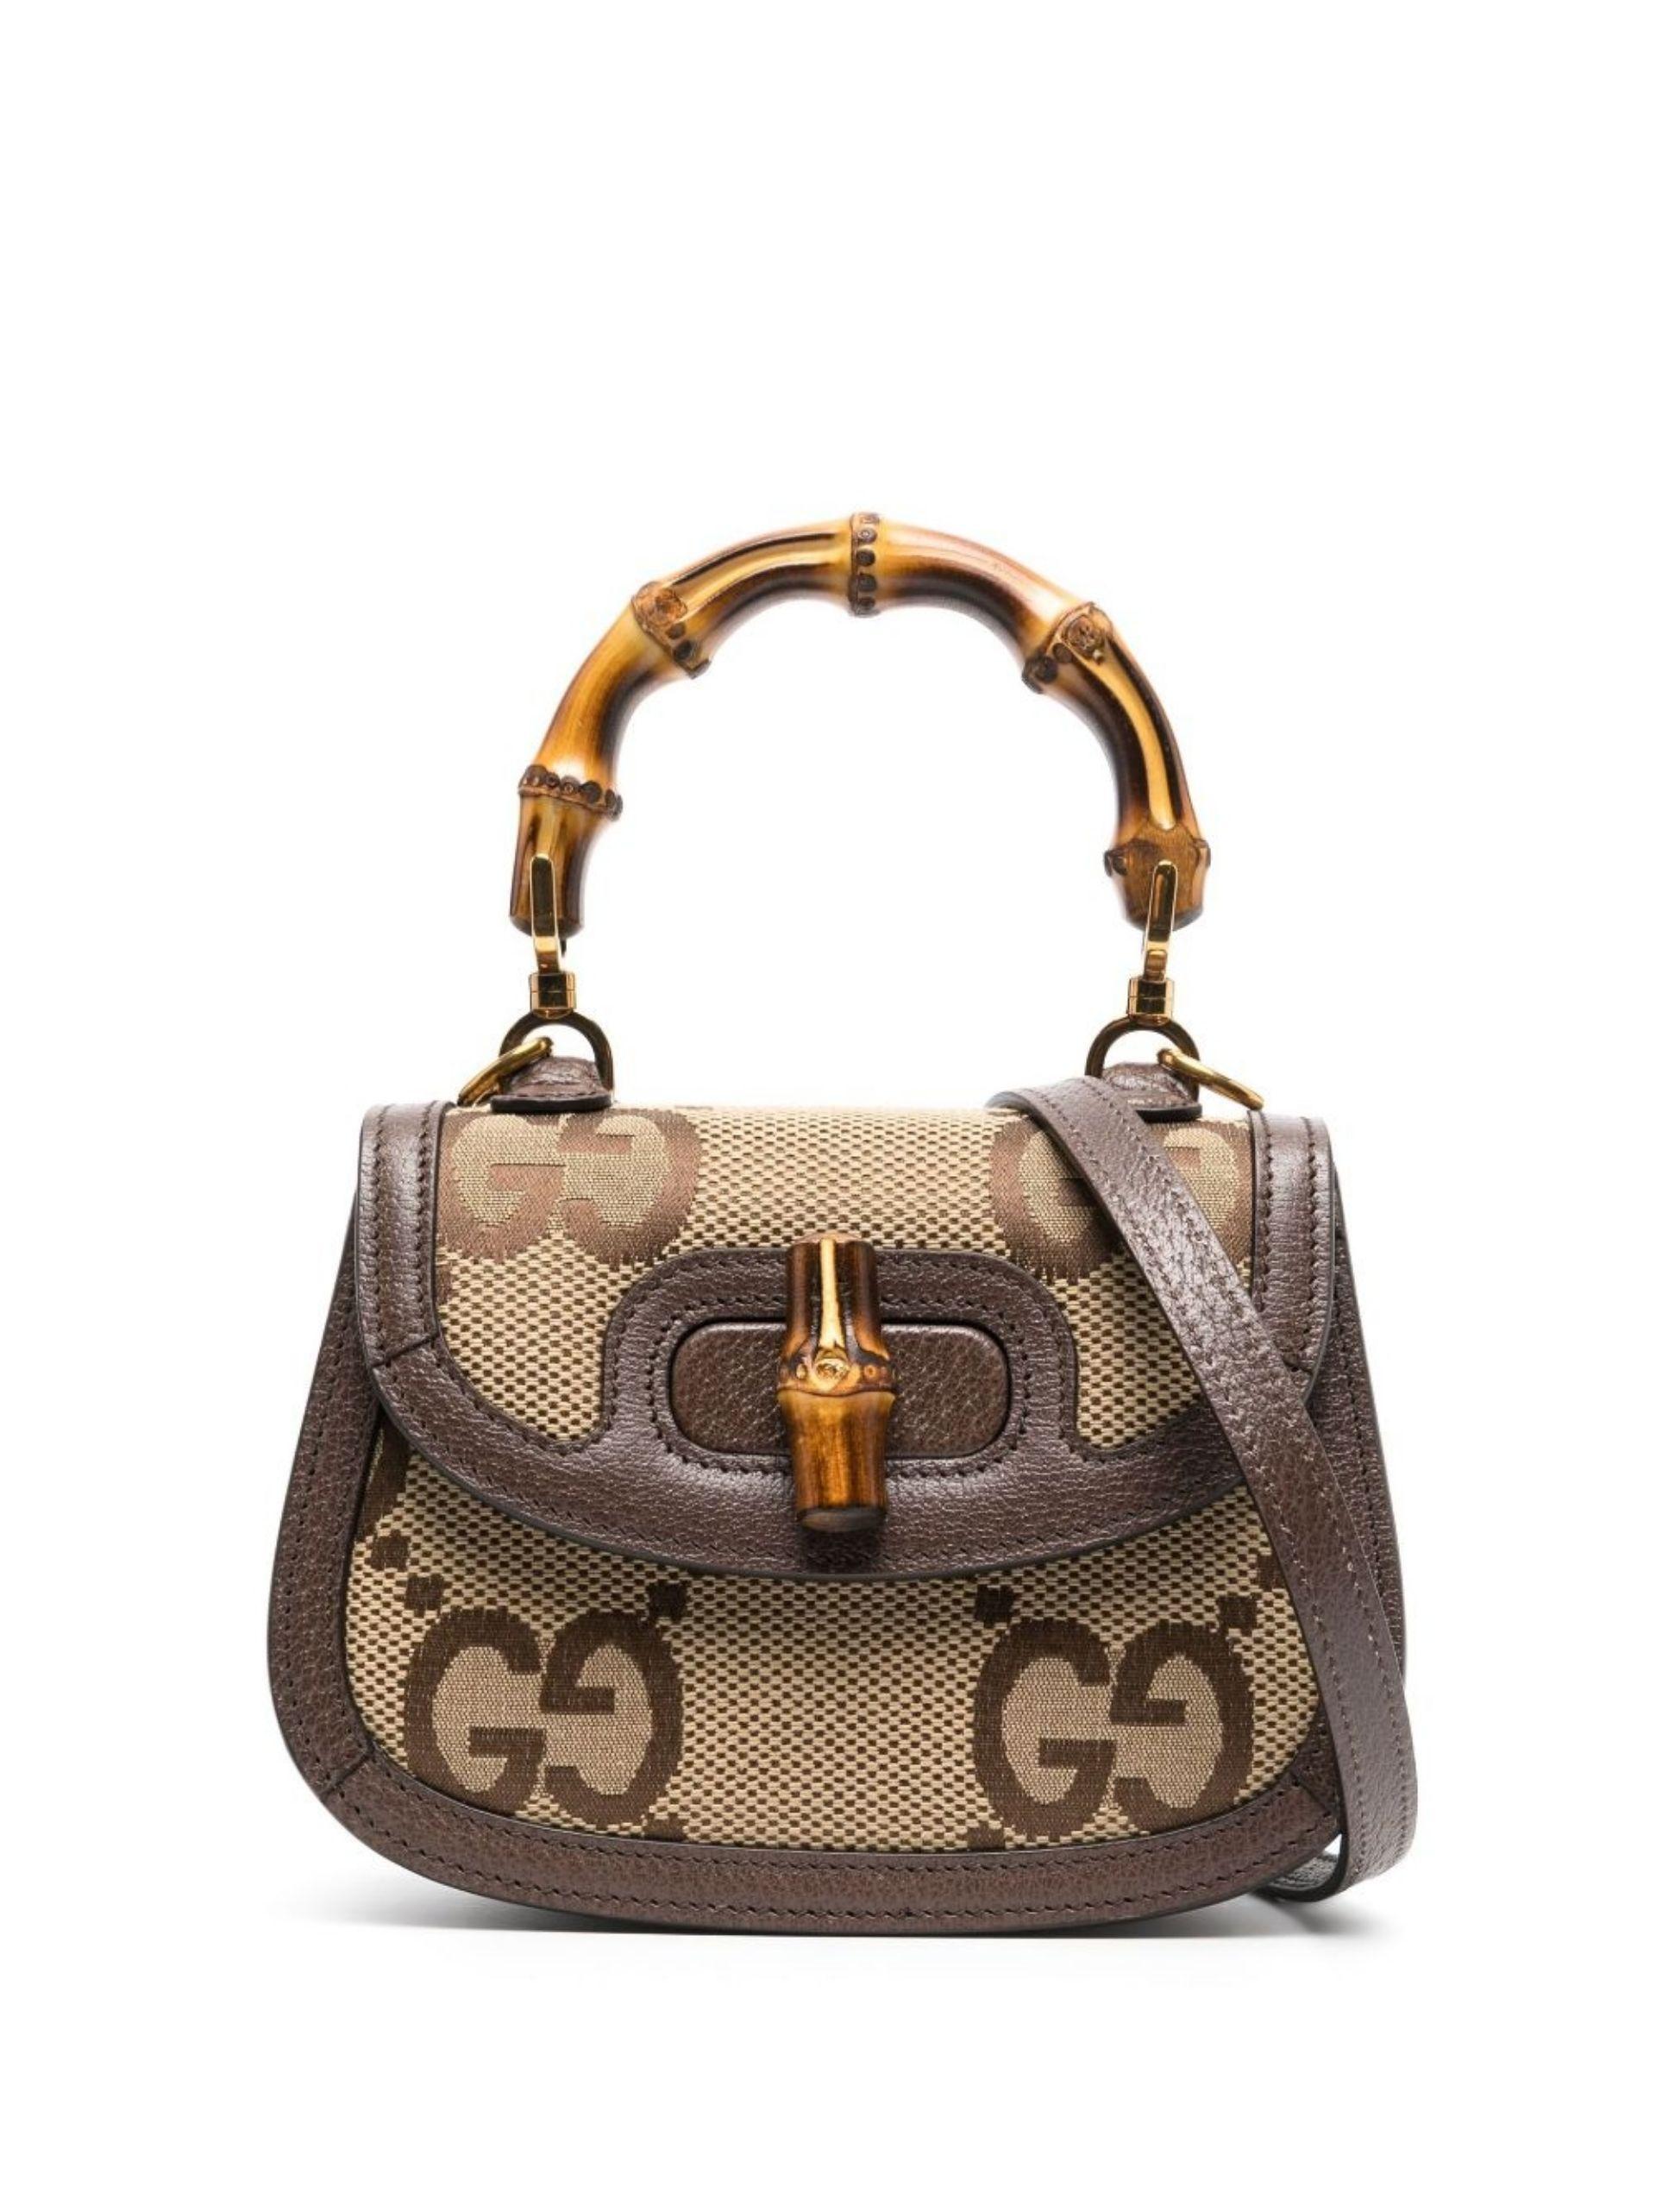 Gucci 1947 Small Top Handle Bag